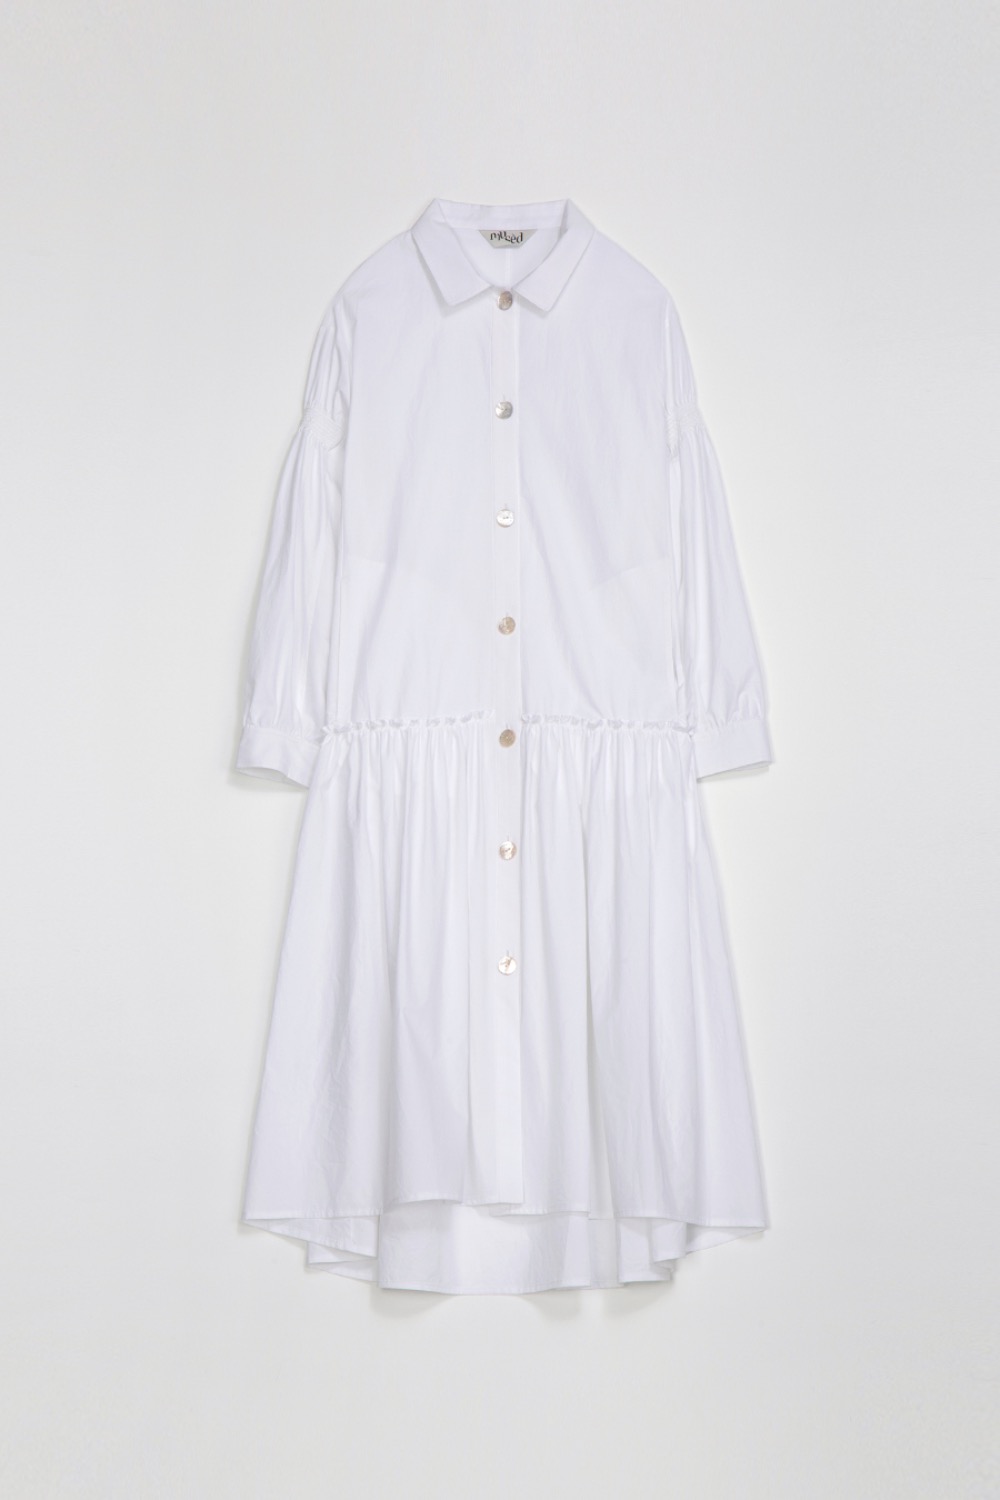 SAISON SHIRT DRESS - OPTIC WHITE COTTON